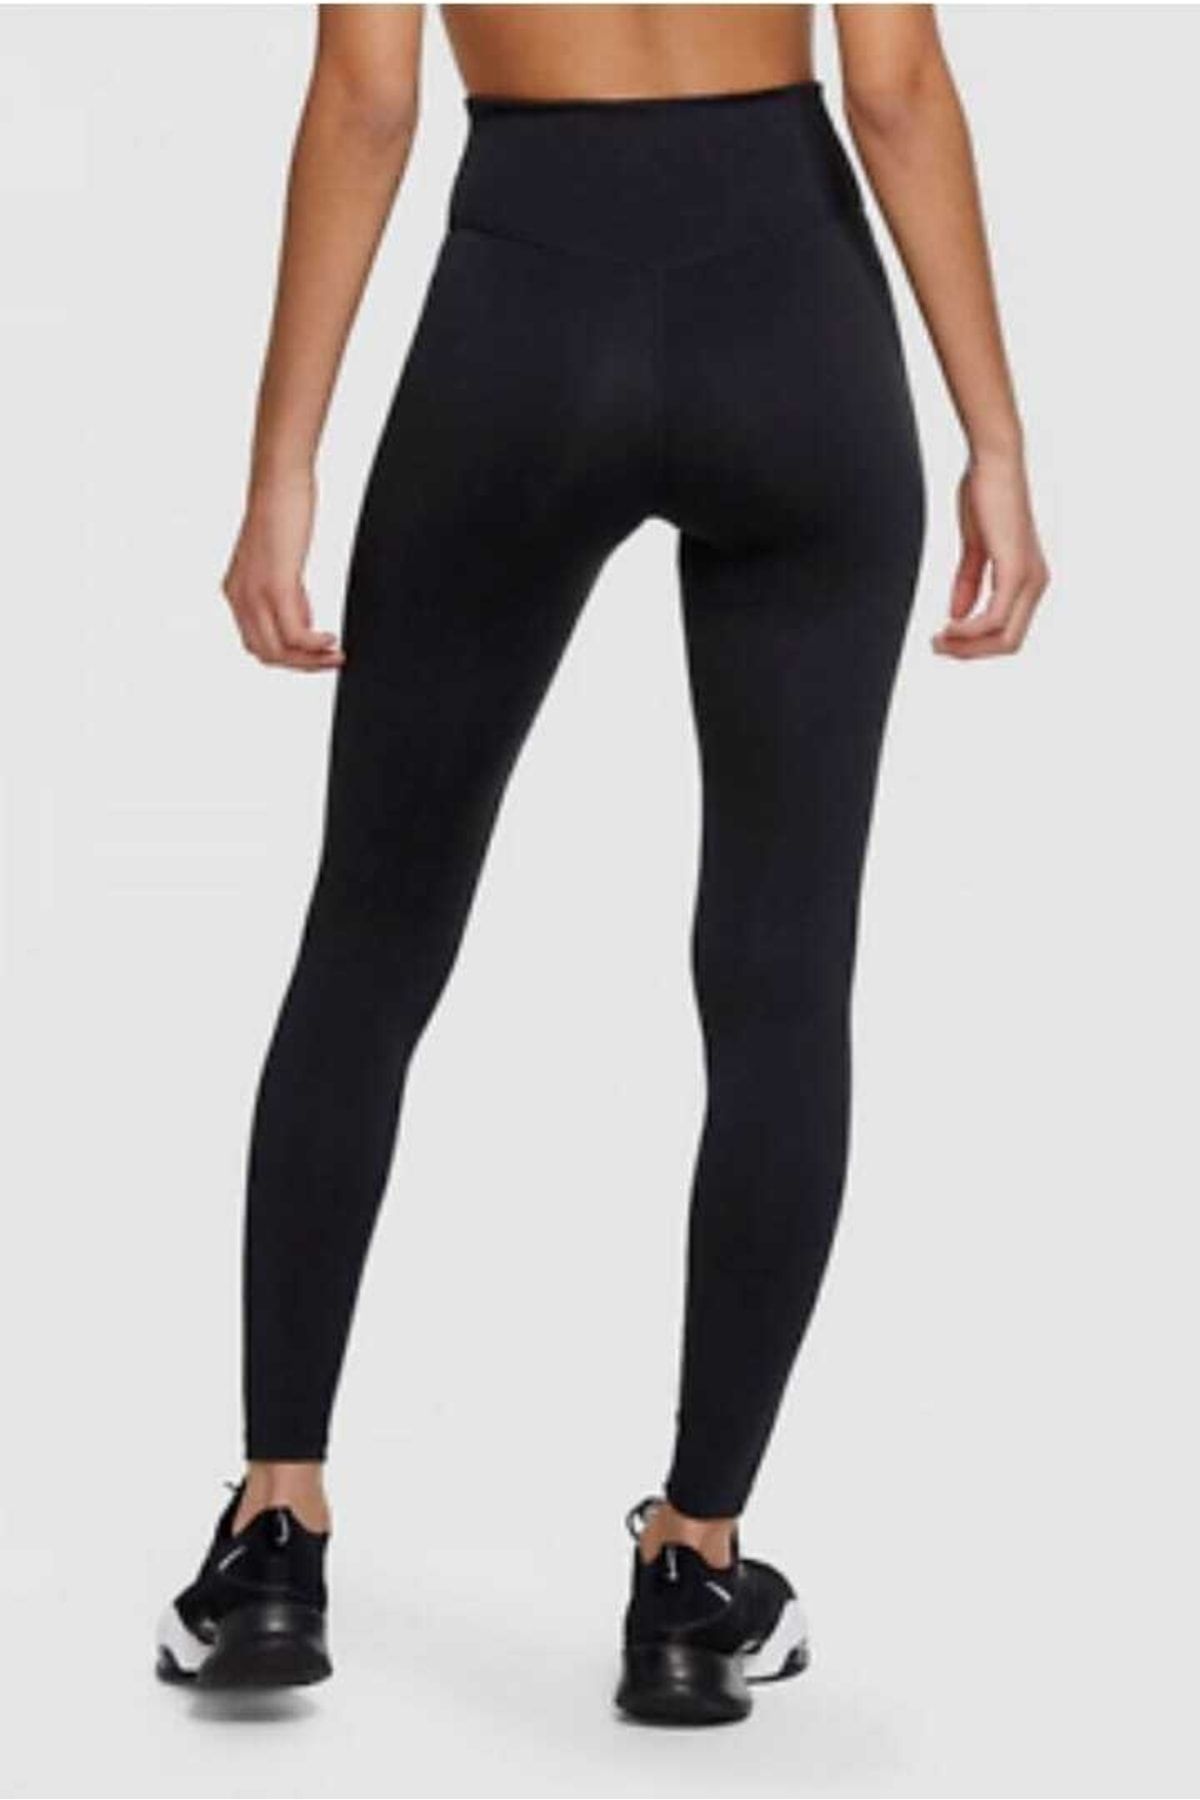 Nike One Women Black/Gold Mid-Rise Printed Training Leggings DQ6308-010  Size XS